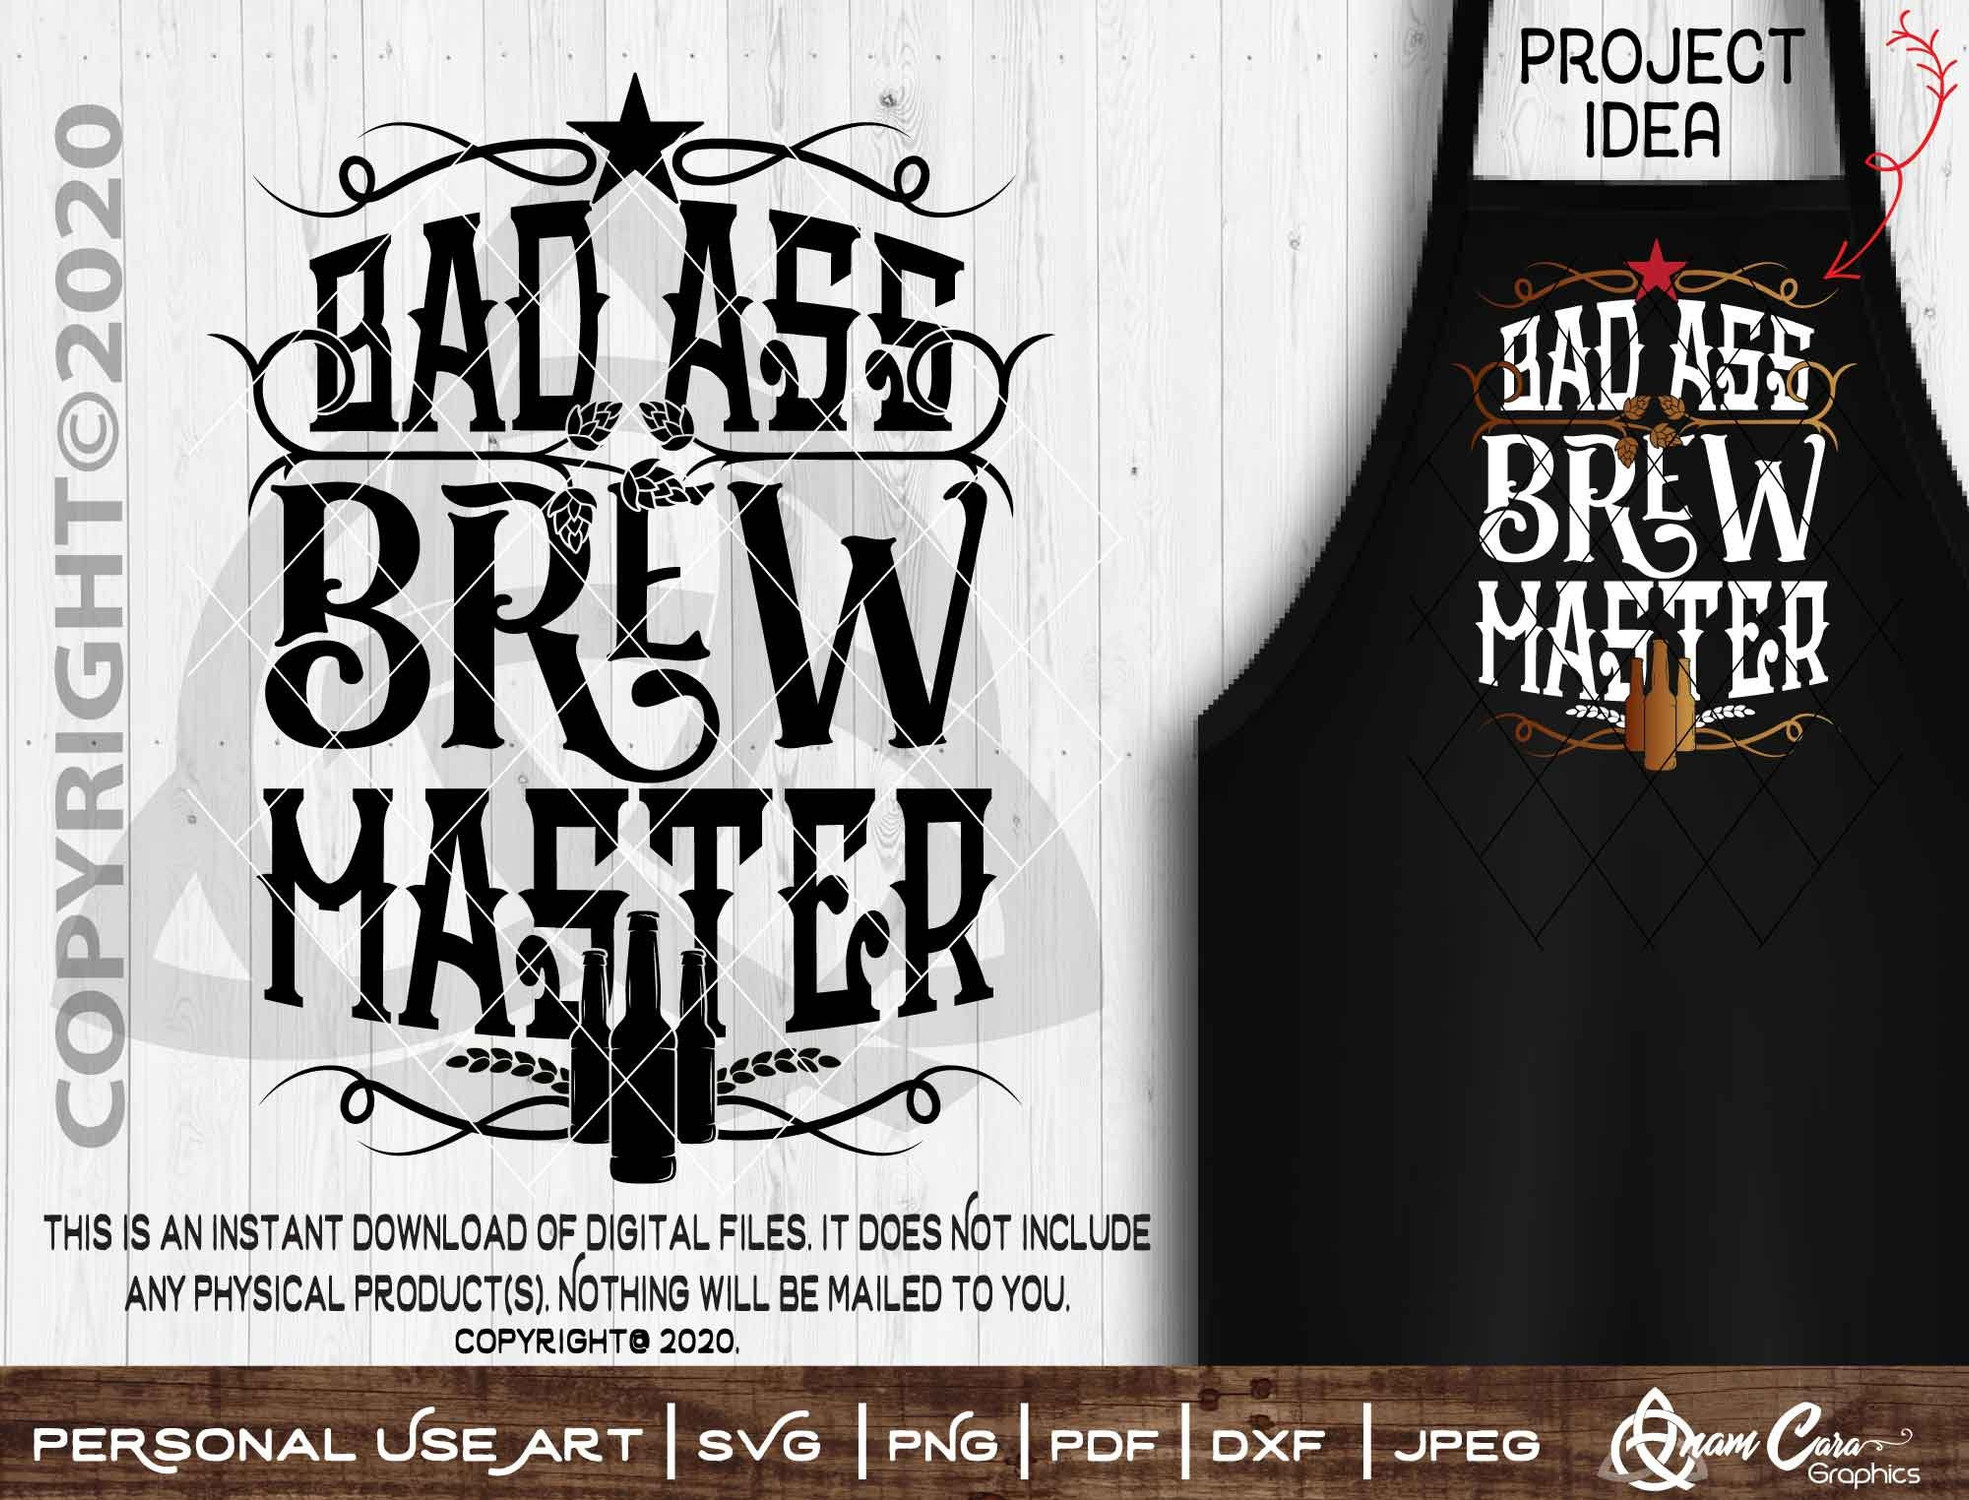 Bad Ass Brew Master